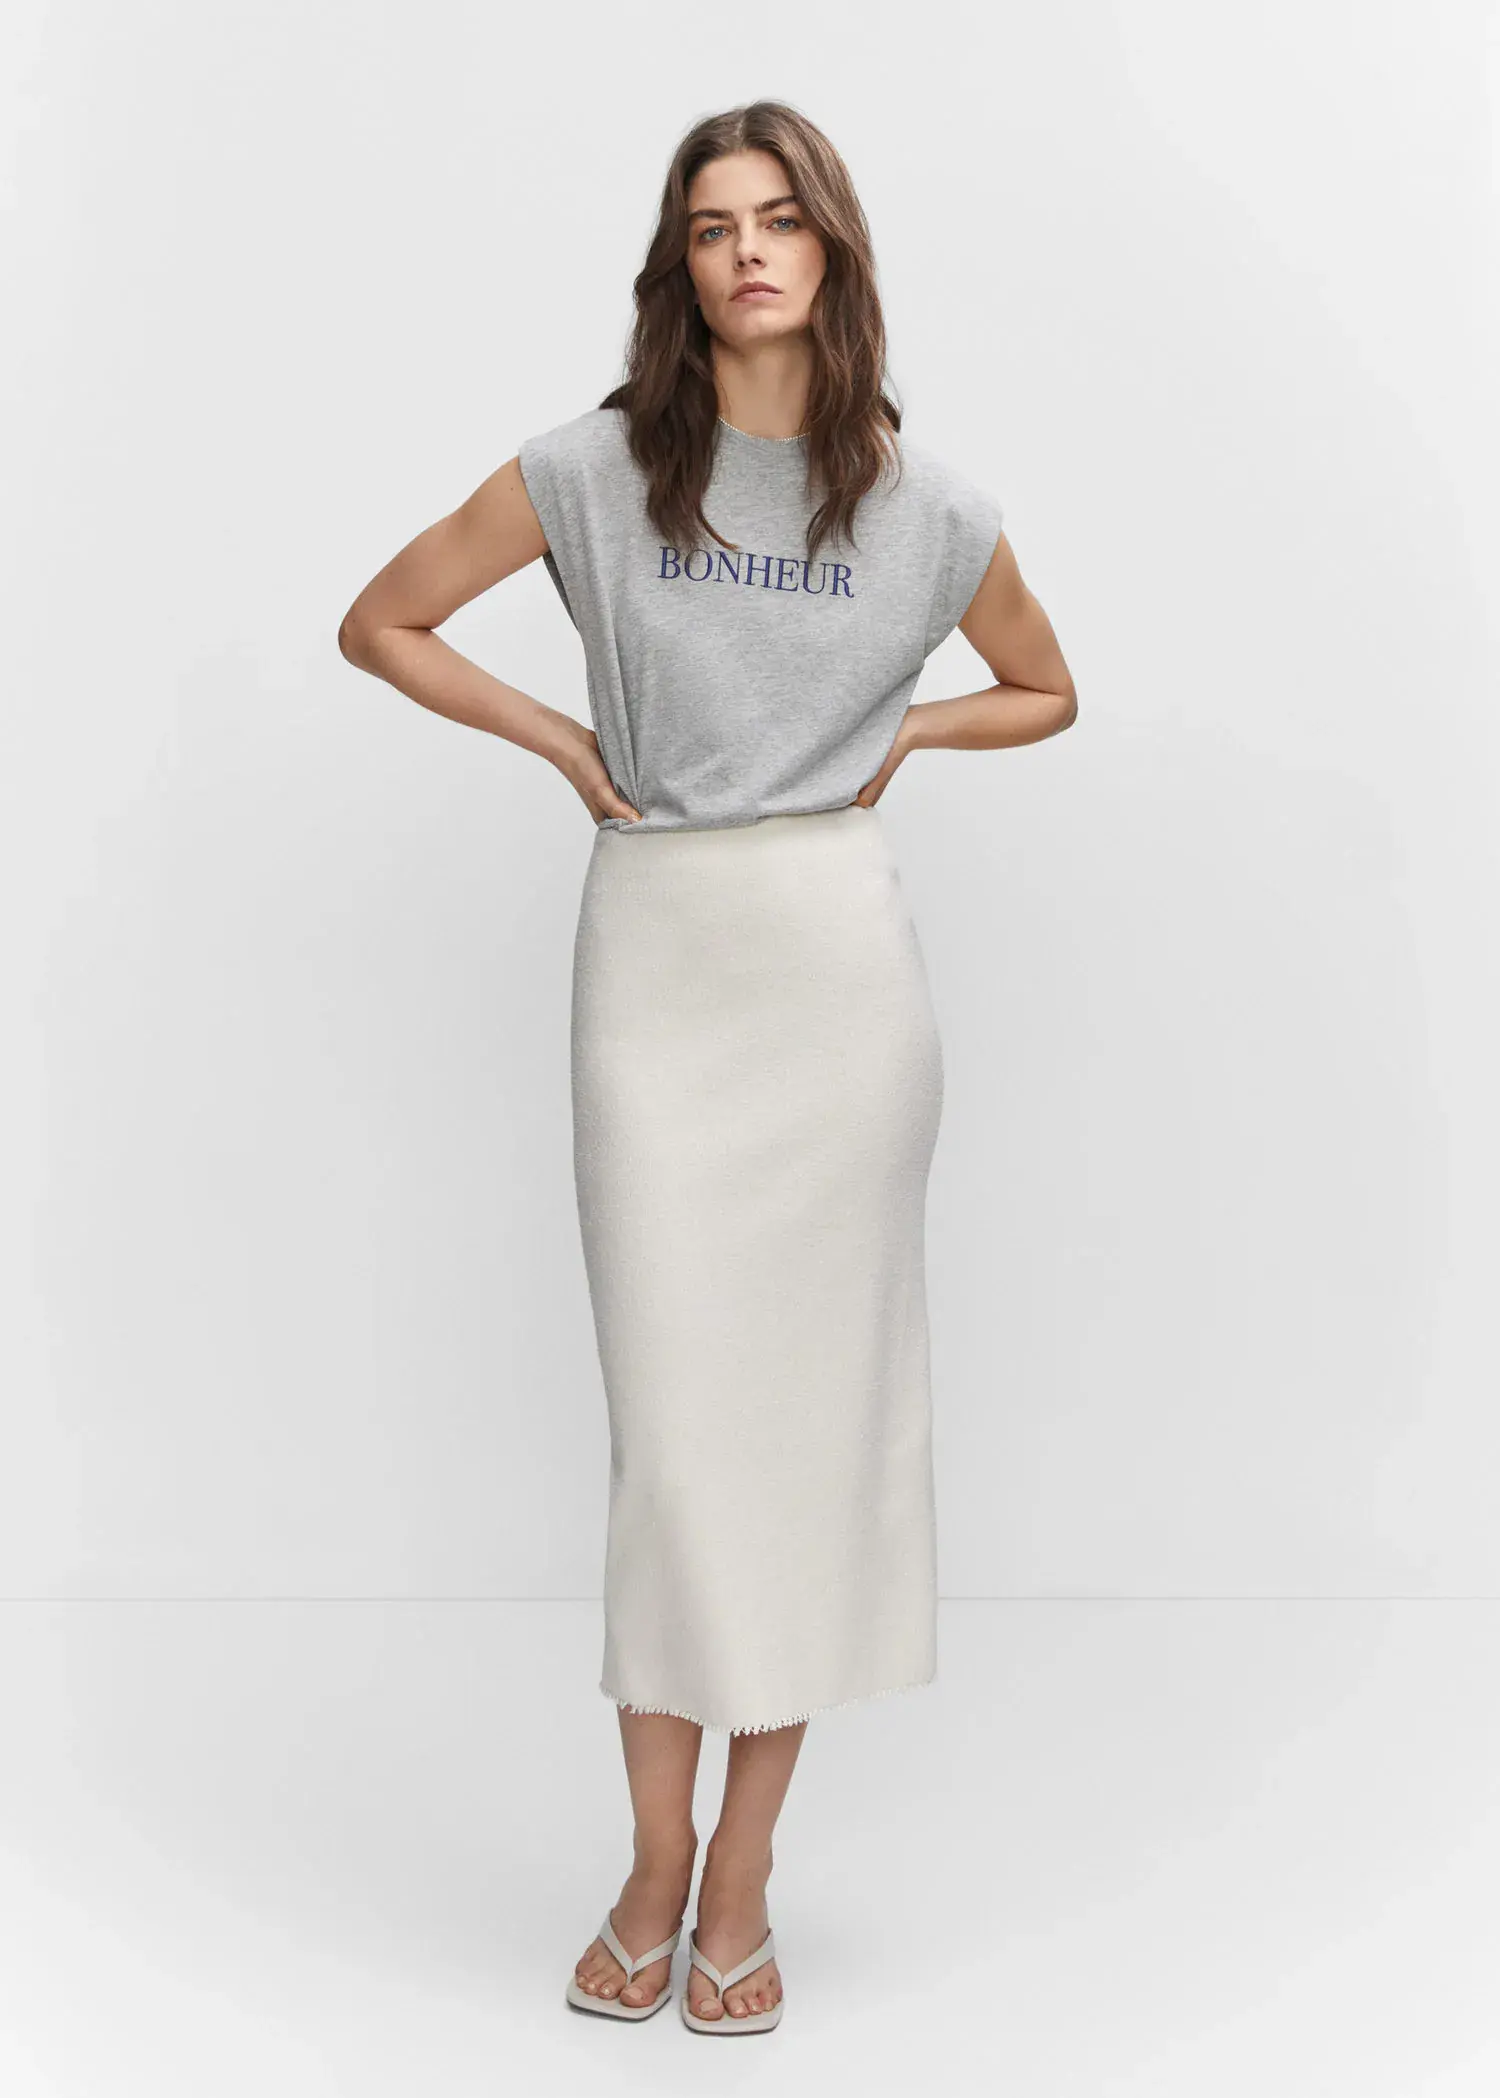 Mango Message cotton T-shirt. a woman wearing a white skirt and a gray shirt. 